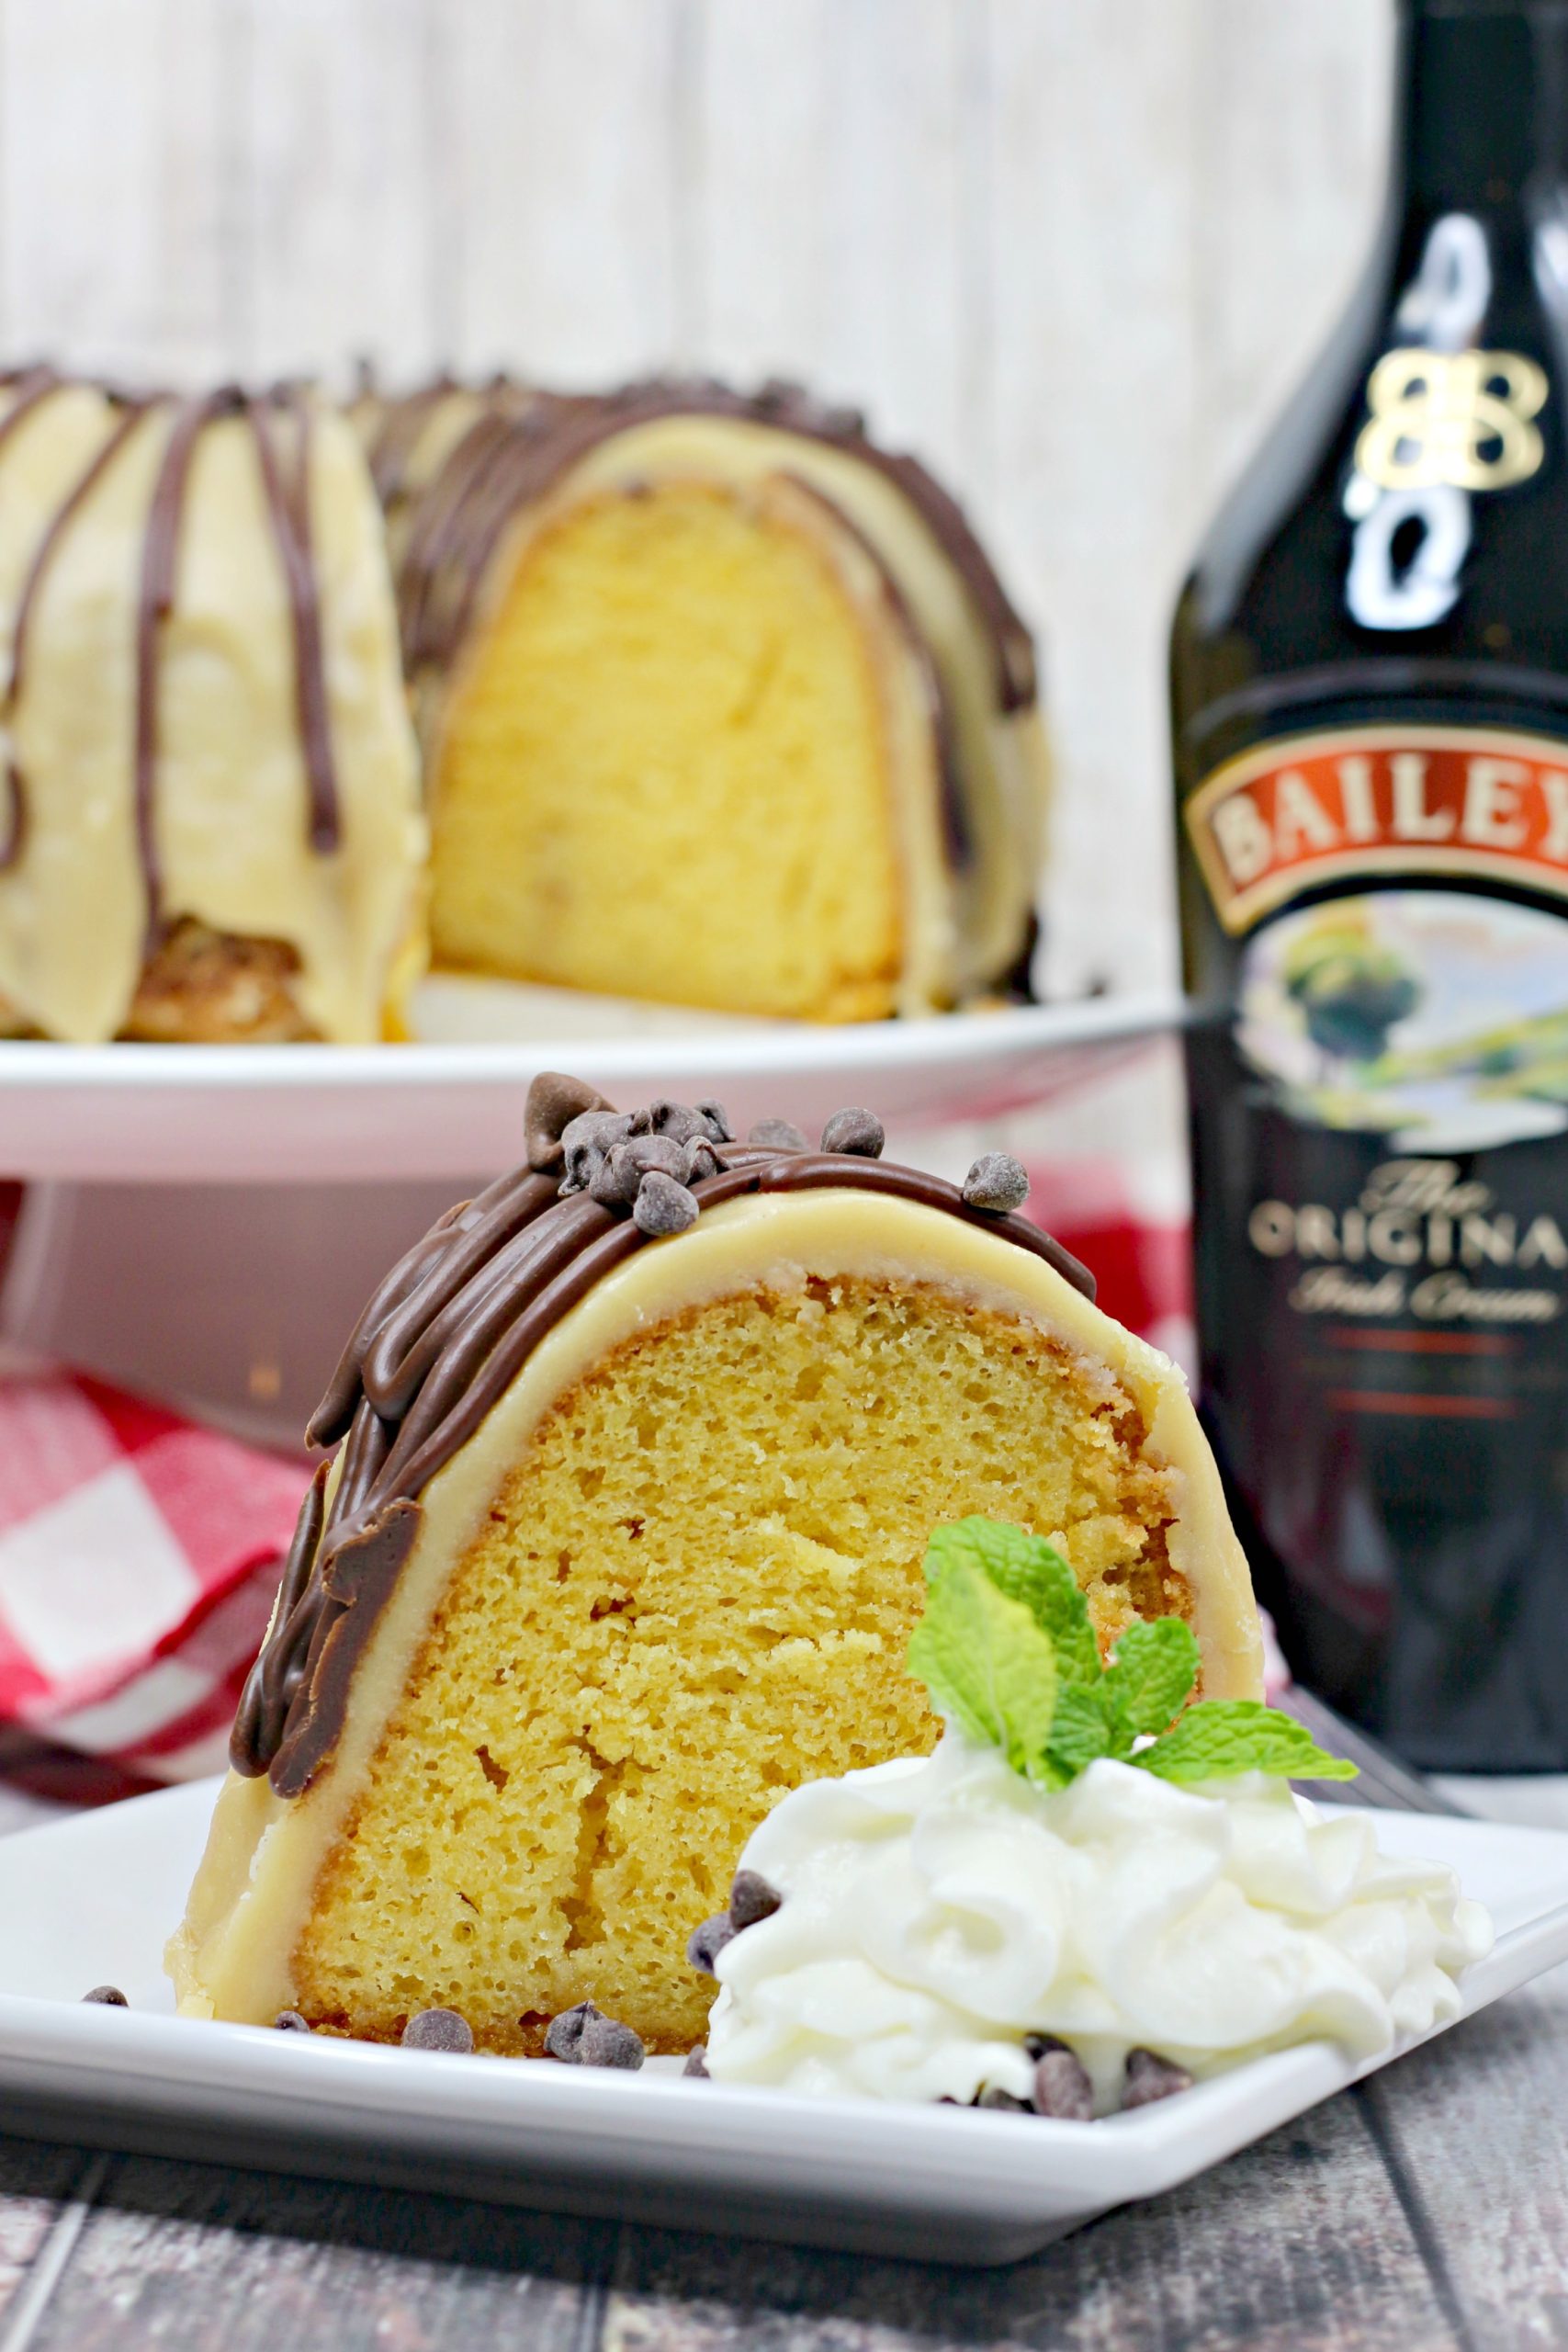 Irish Cream Bundt Cake Recipe  Delicious Irish Desserts - Global Bakes